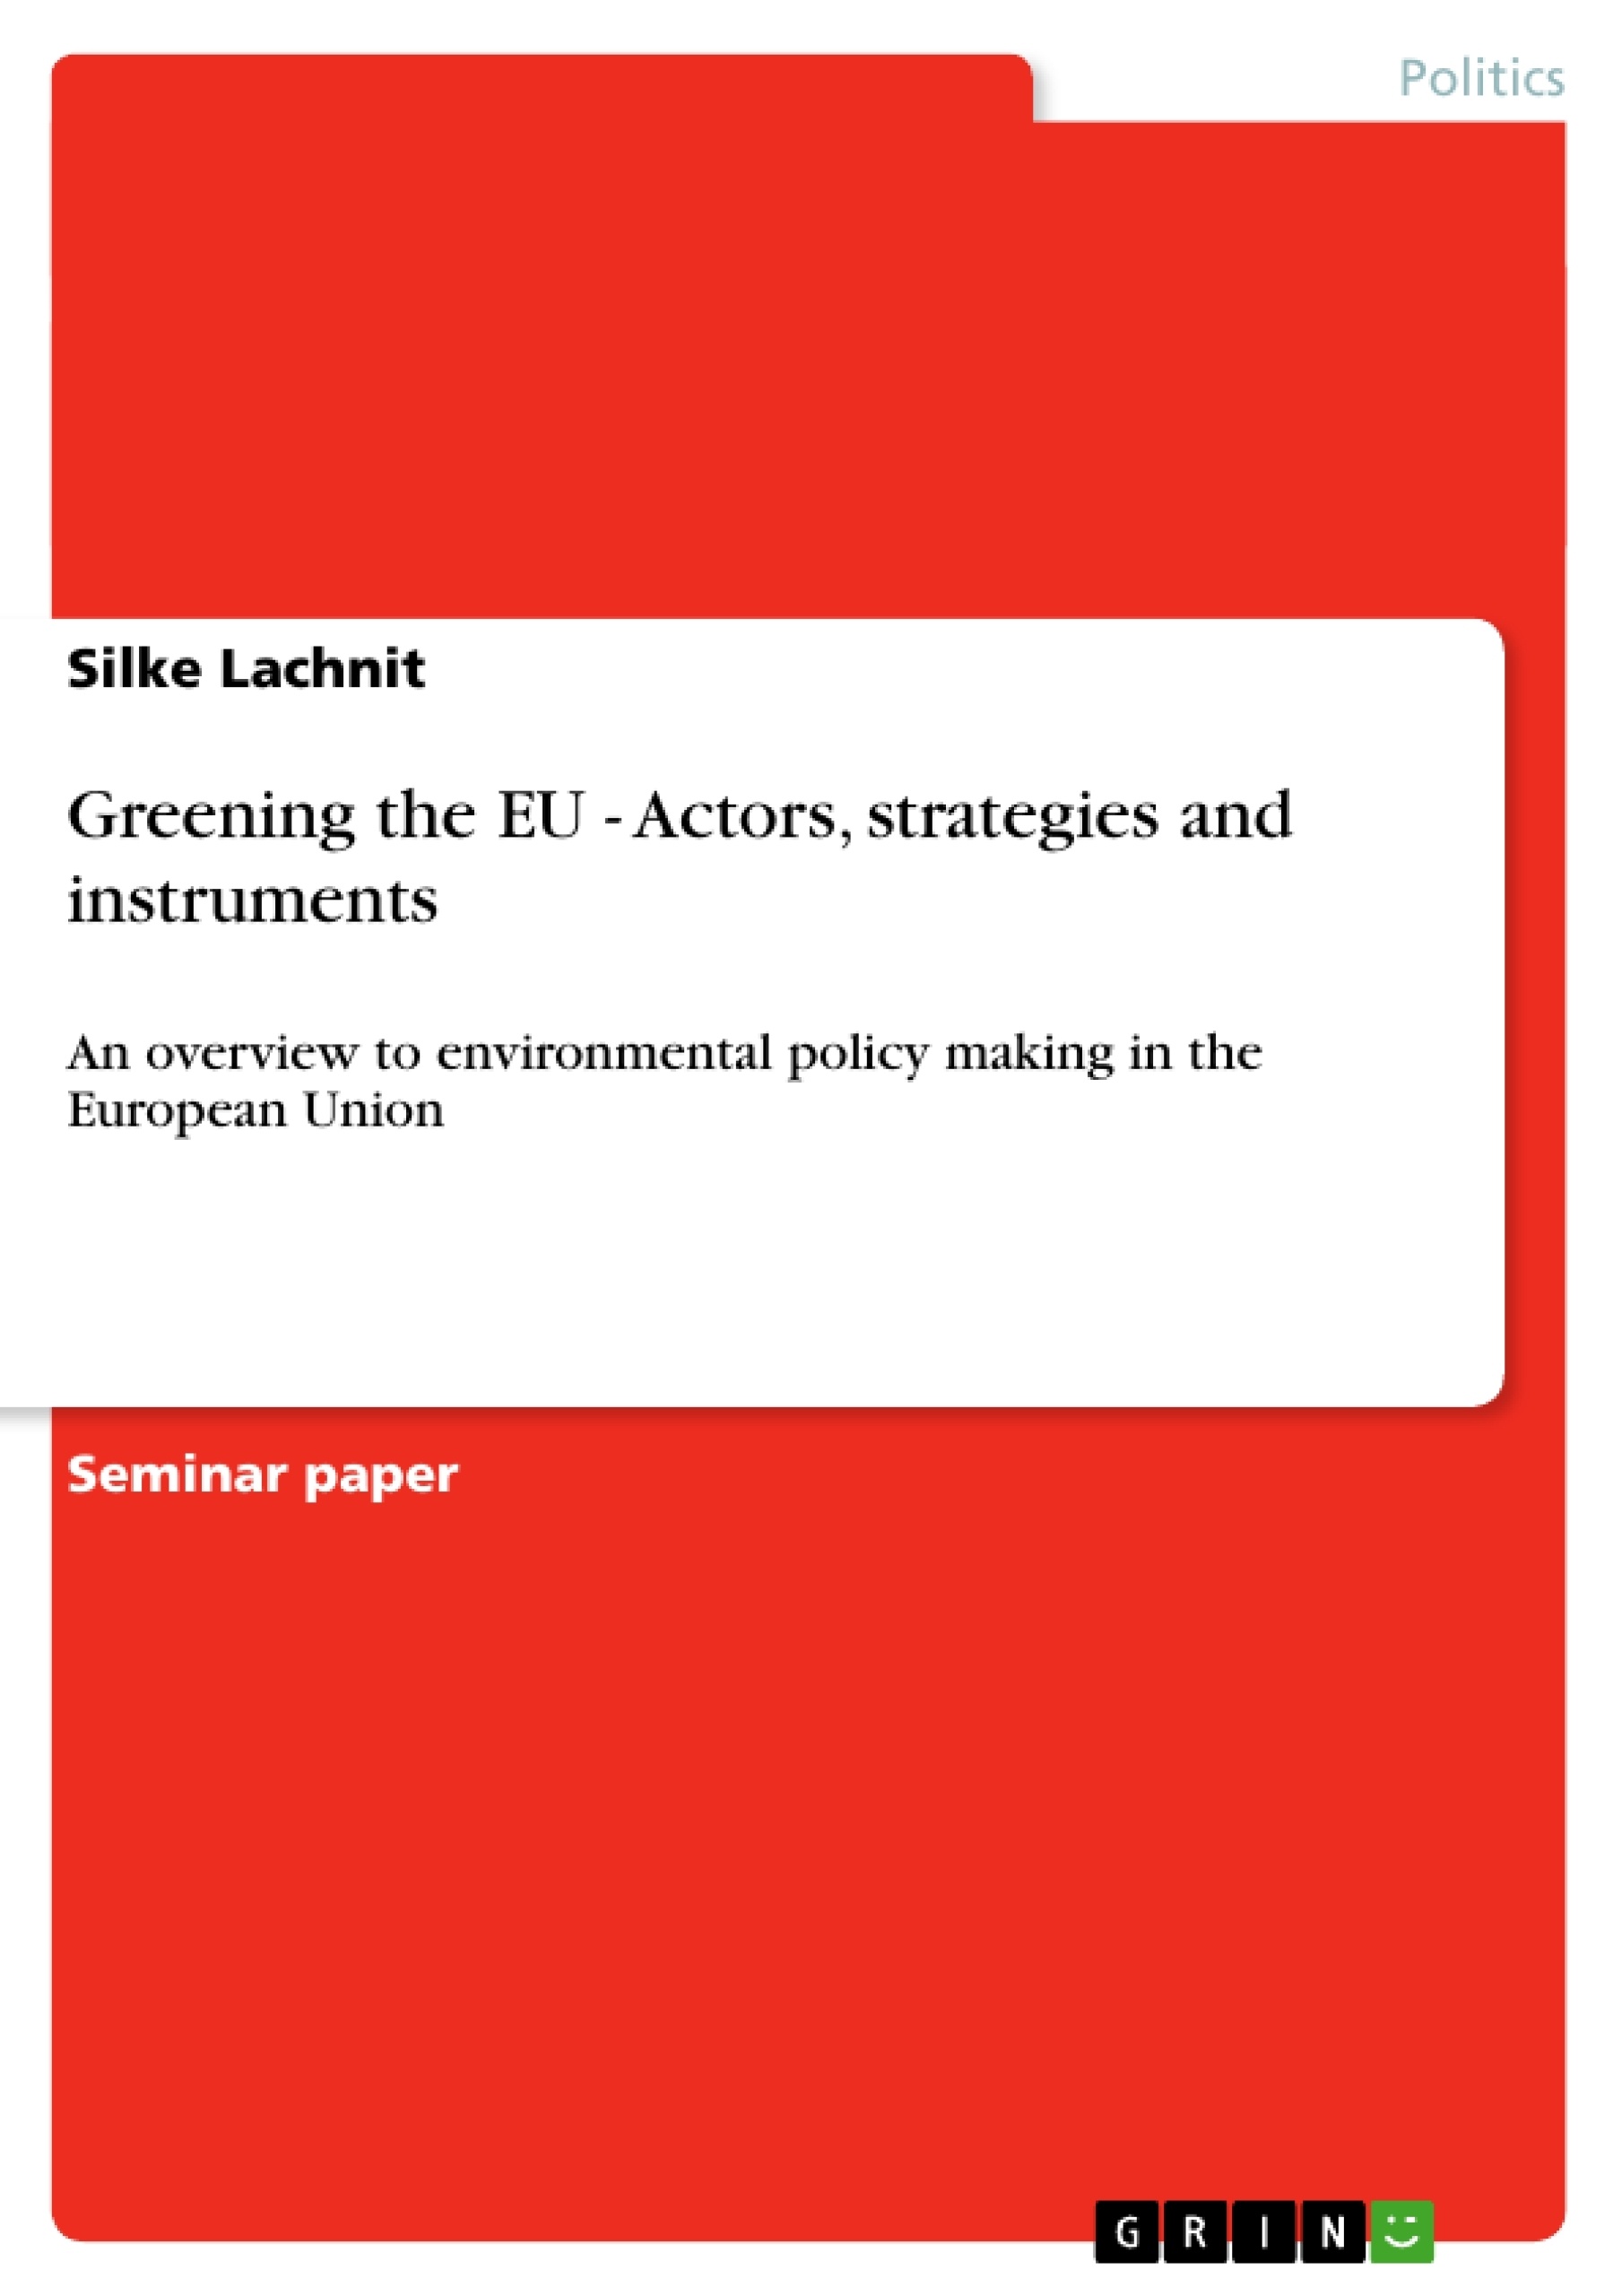 Title: Greening the EU - Actors, strategies and instruments